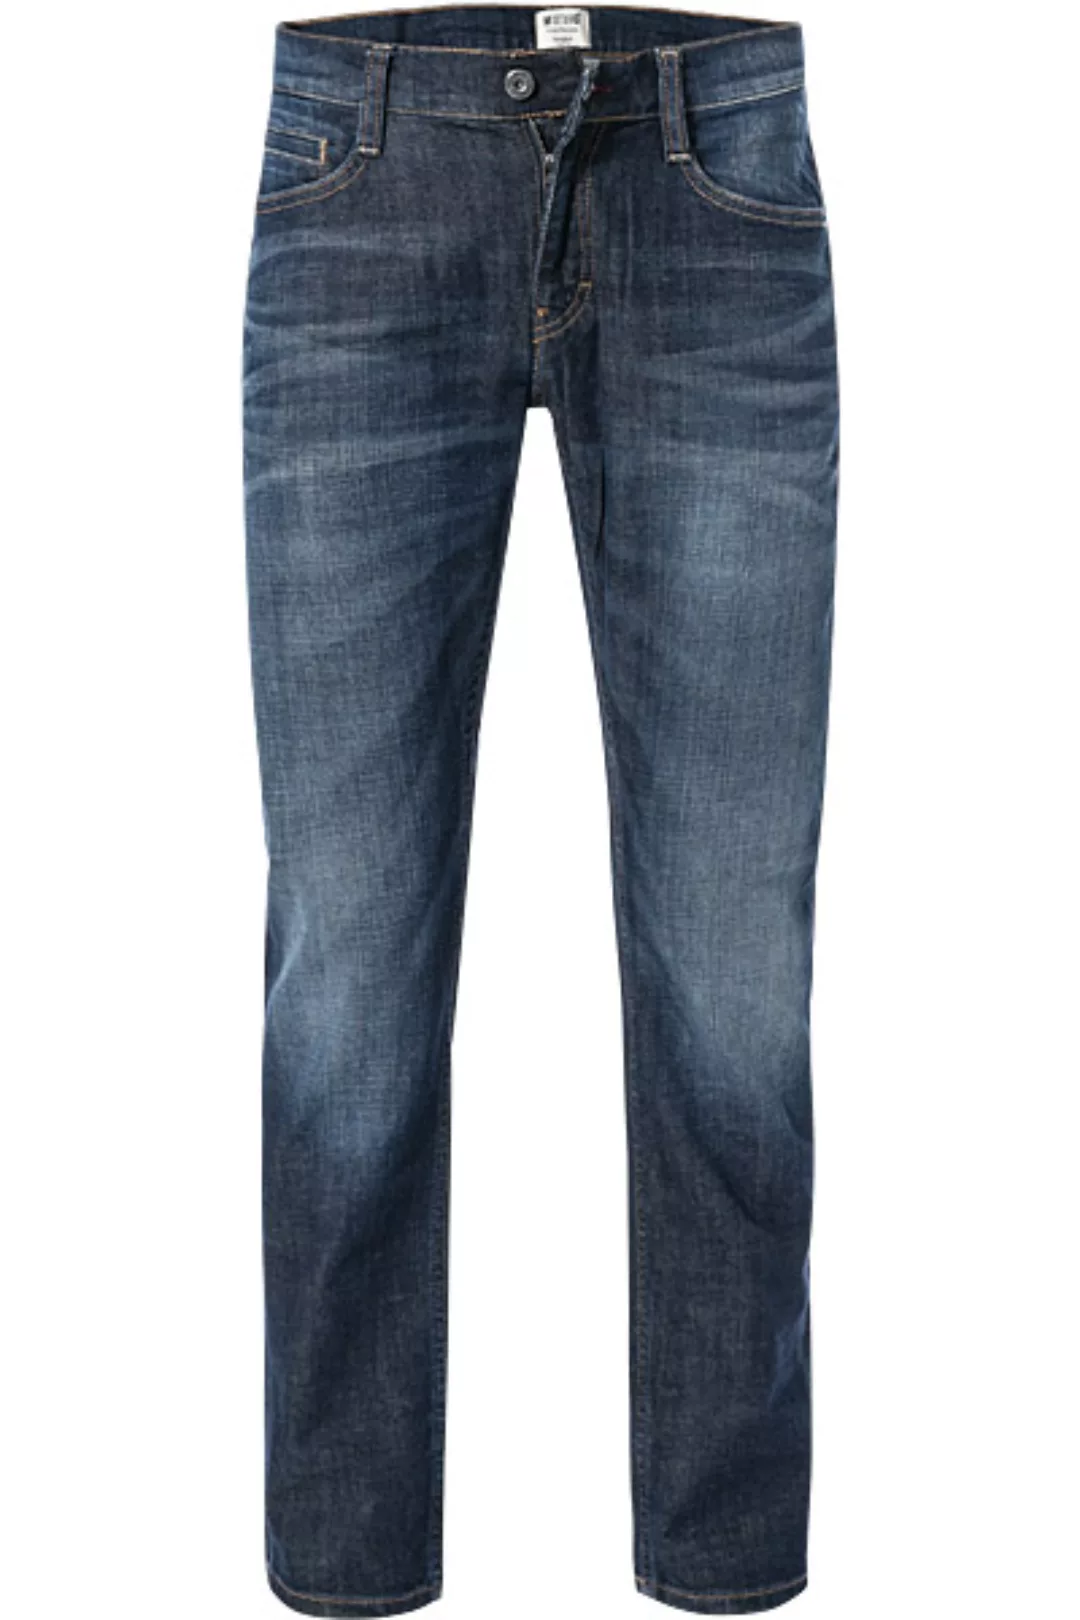 MUSTANG Jeans Oregon Tapered 3116-5111/583 günstig online kaufen